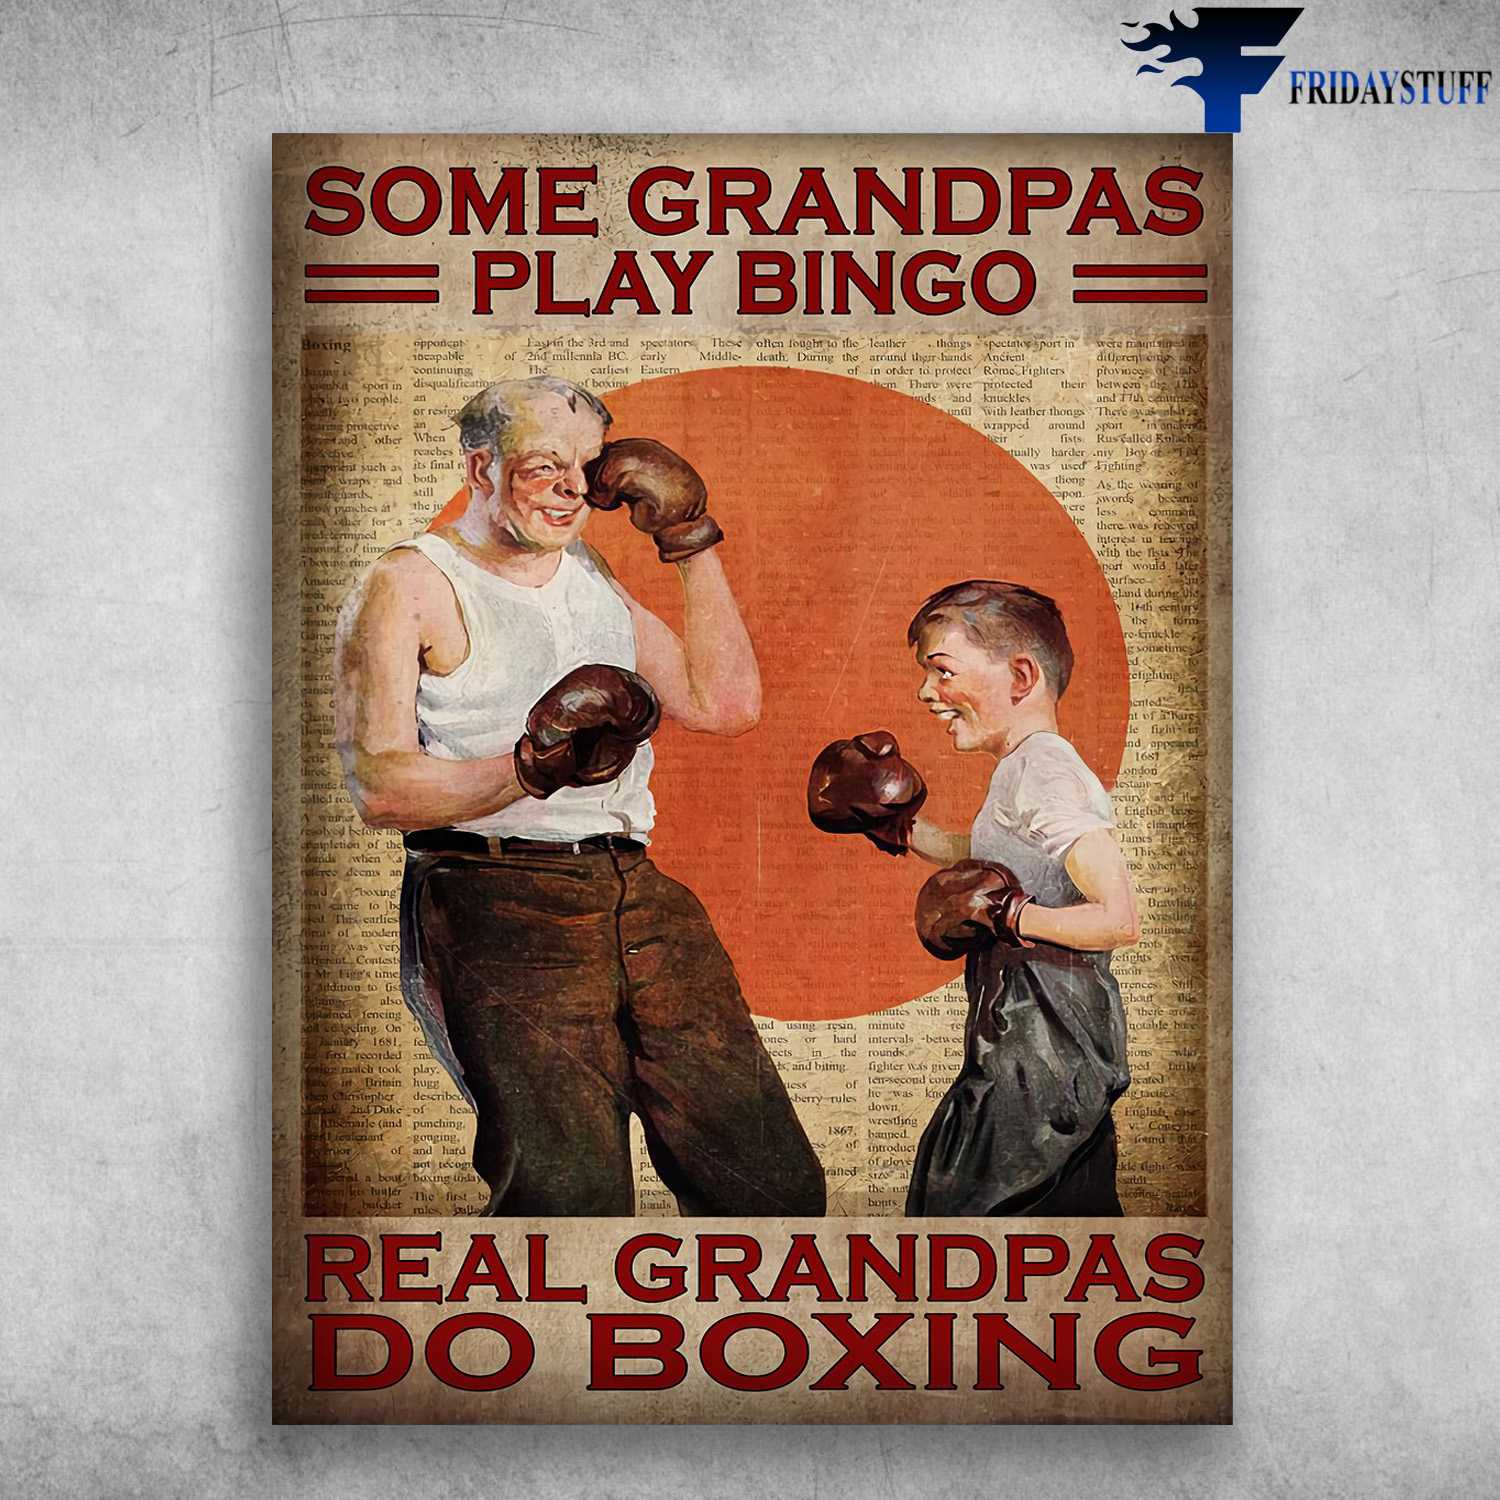 Boxing Poster, Grandpa Grandson - Some Grandpas Play Bingo, Real Grandpas Do Boxing